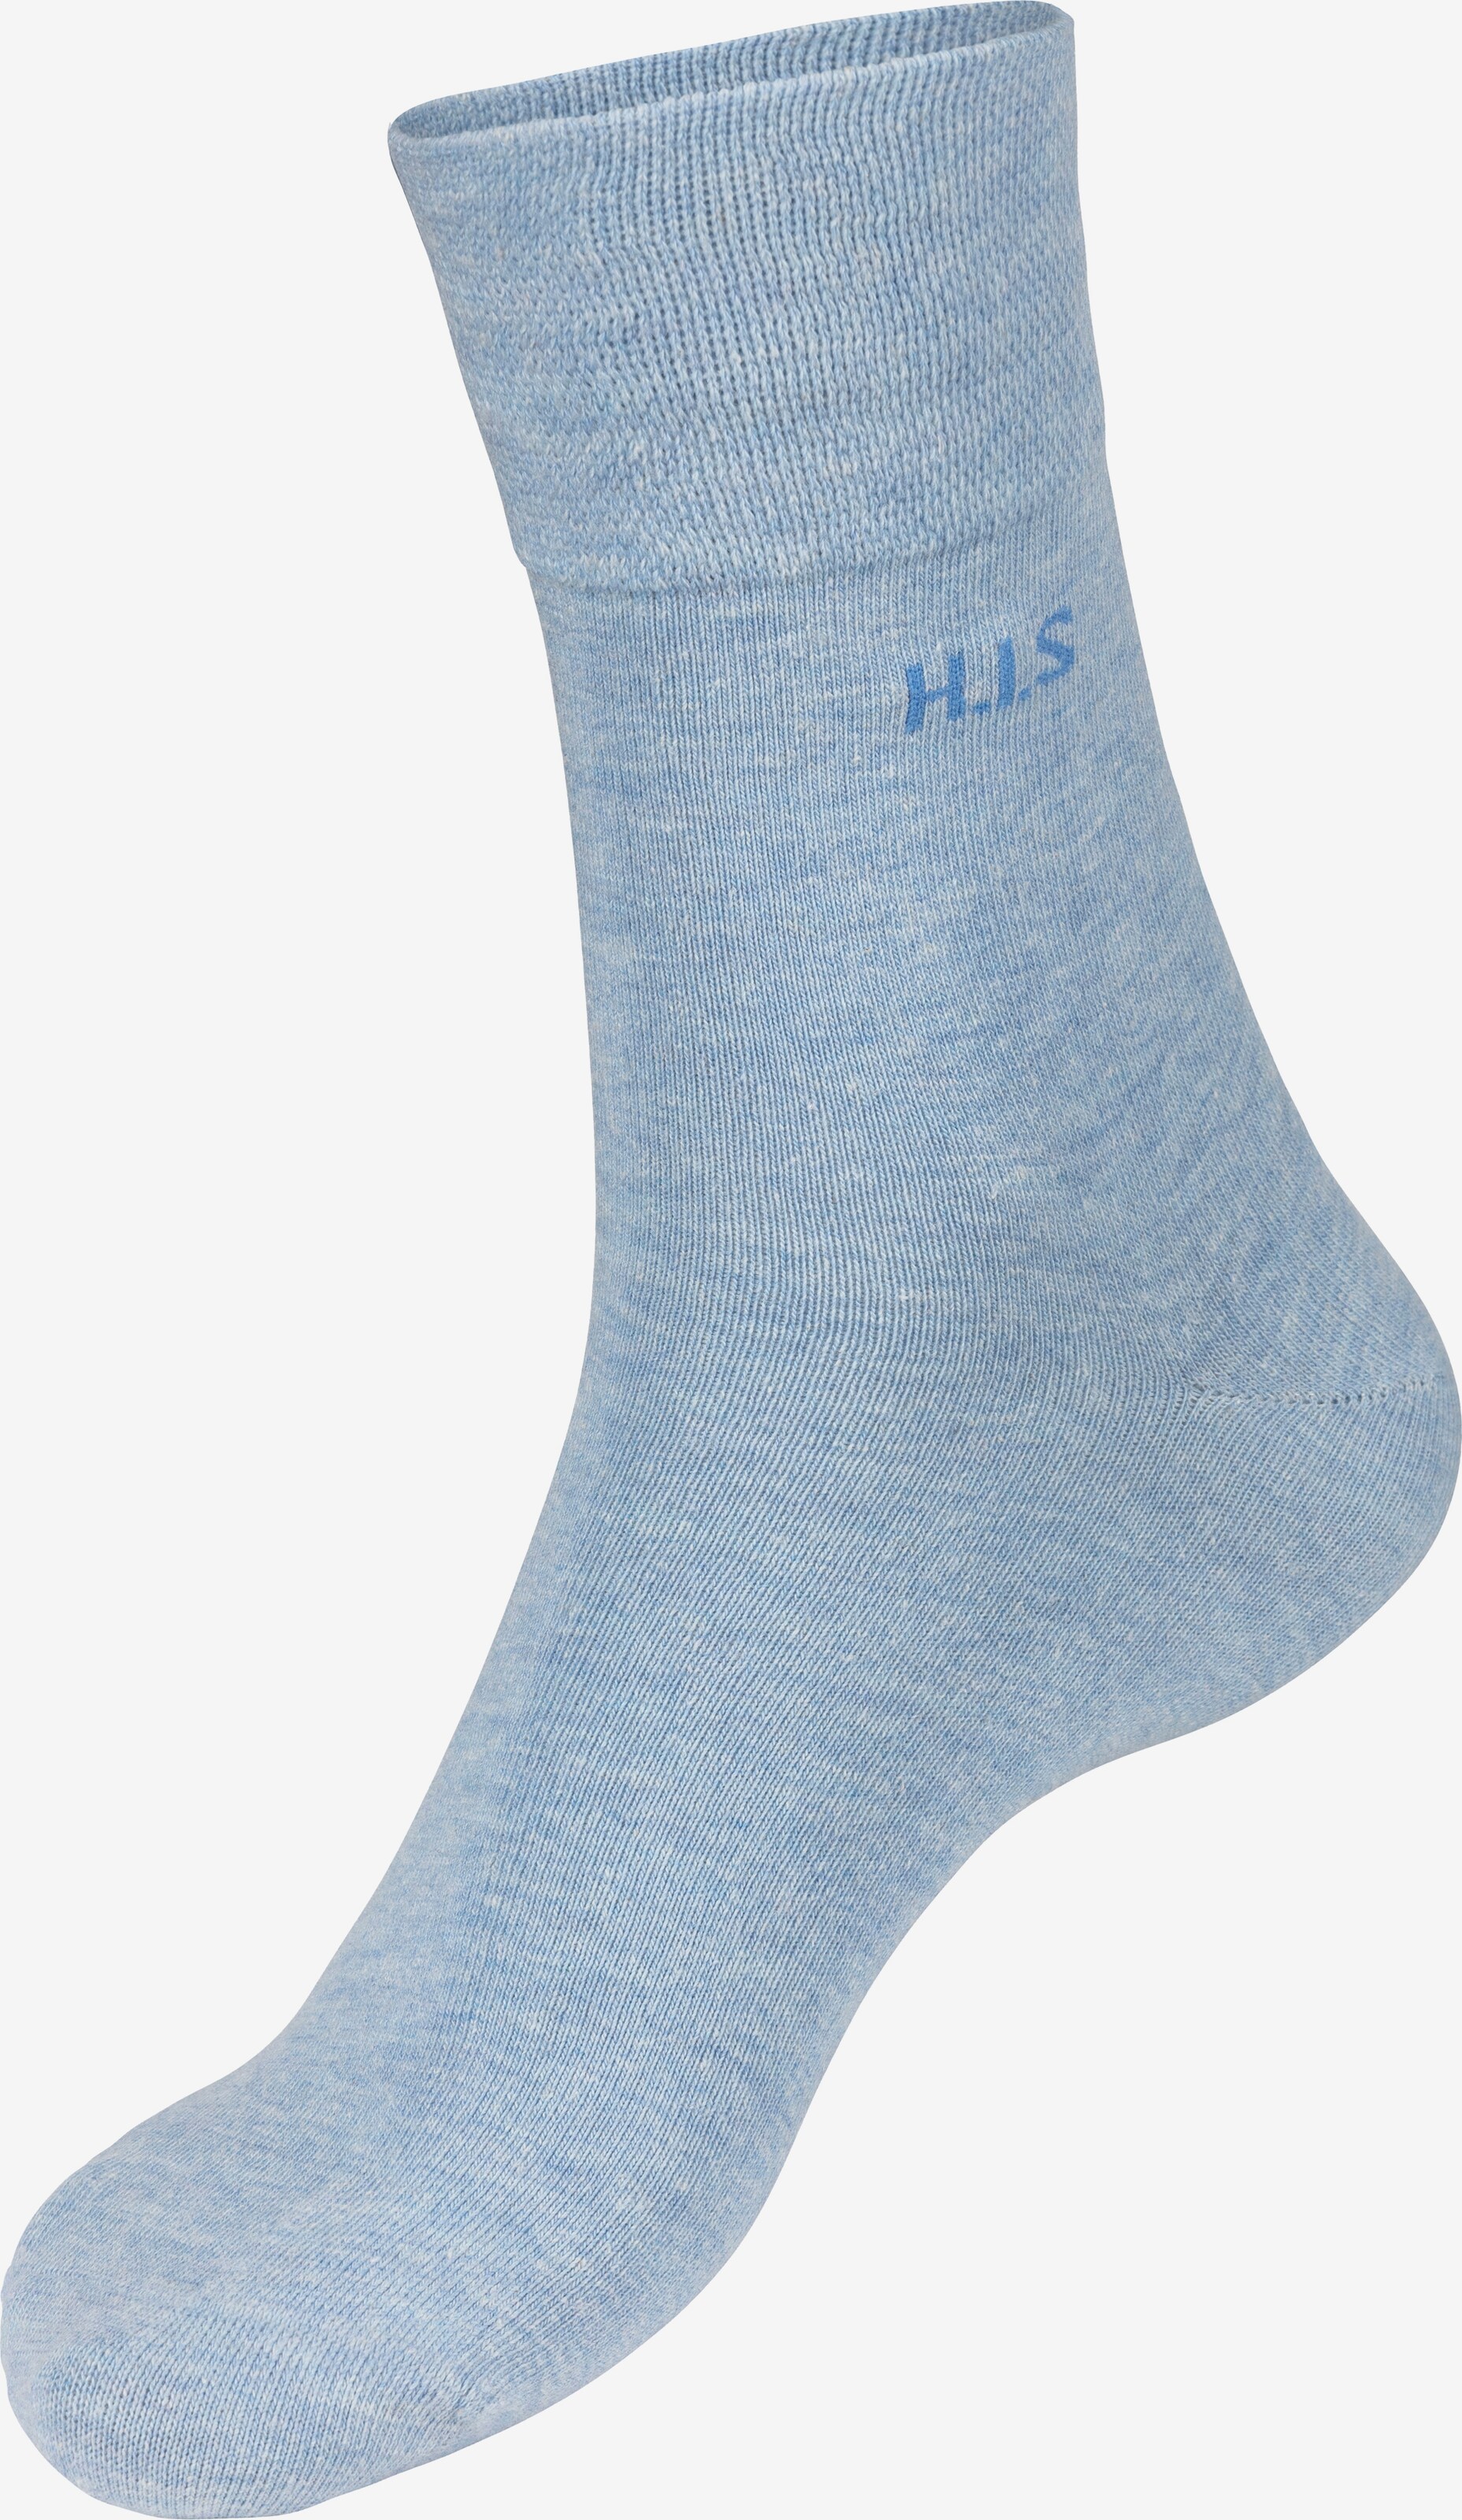 H.I.S Socken YOU Hellblau, Dunkelblau ABOUT | in